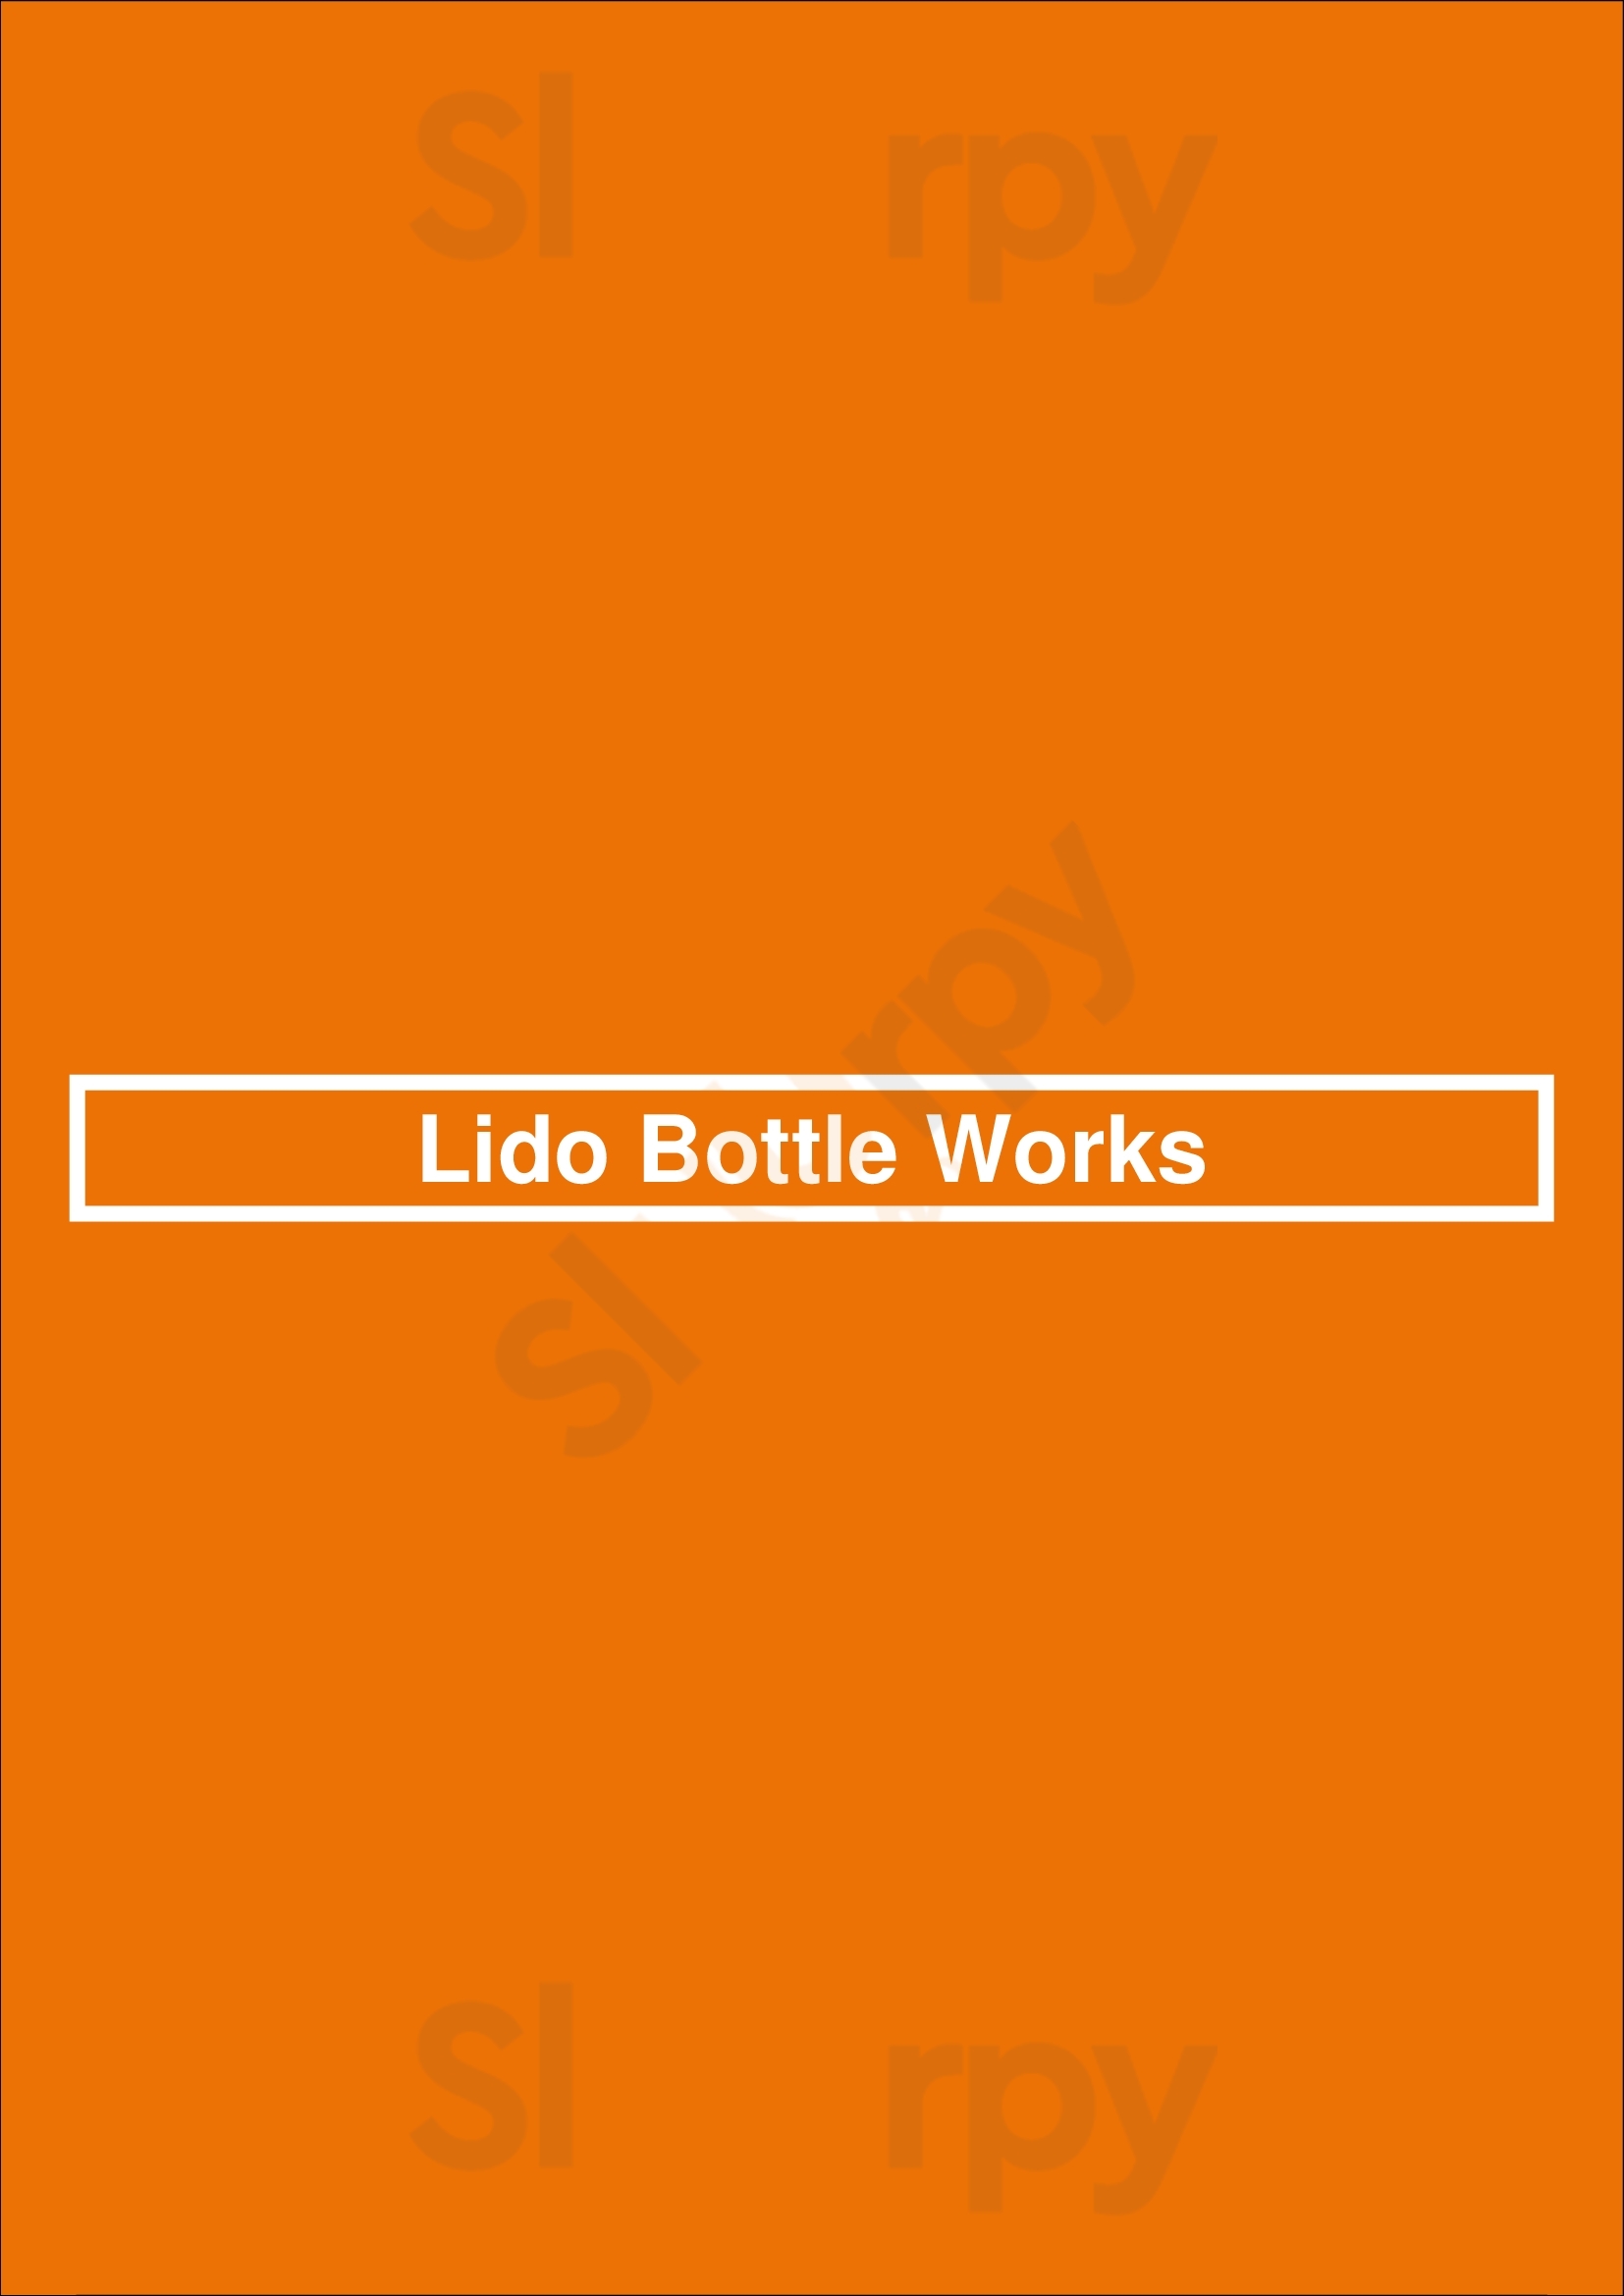 Lido Bottle Works Newport Beach Menu - 1